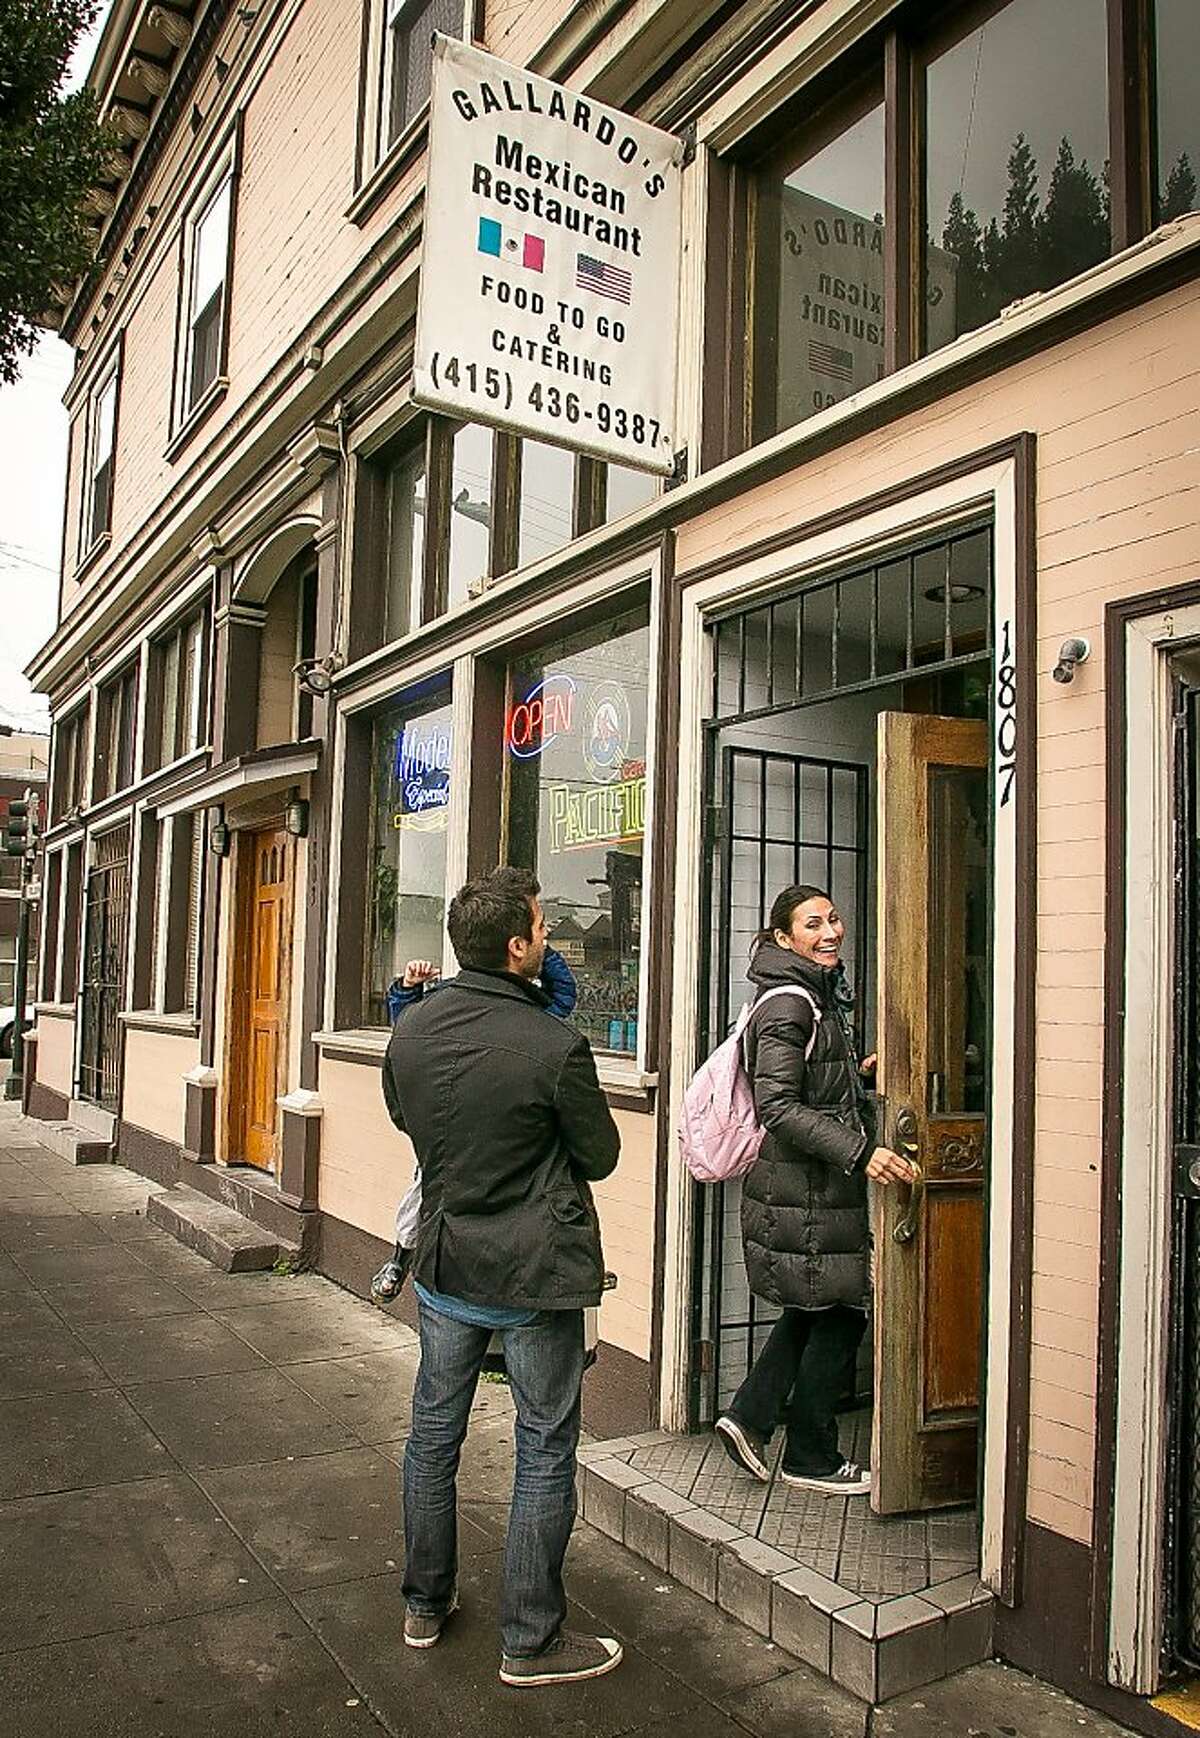 The exterior of Gallardo's restaurant in San Francisco, Calif. is seen on Sunday, December 16th, 2012.